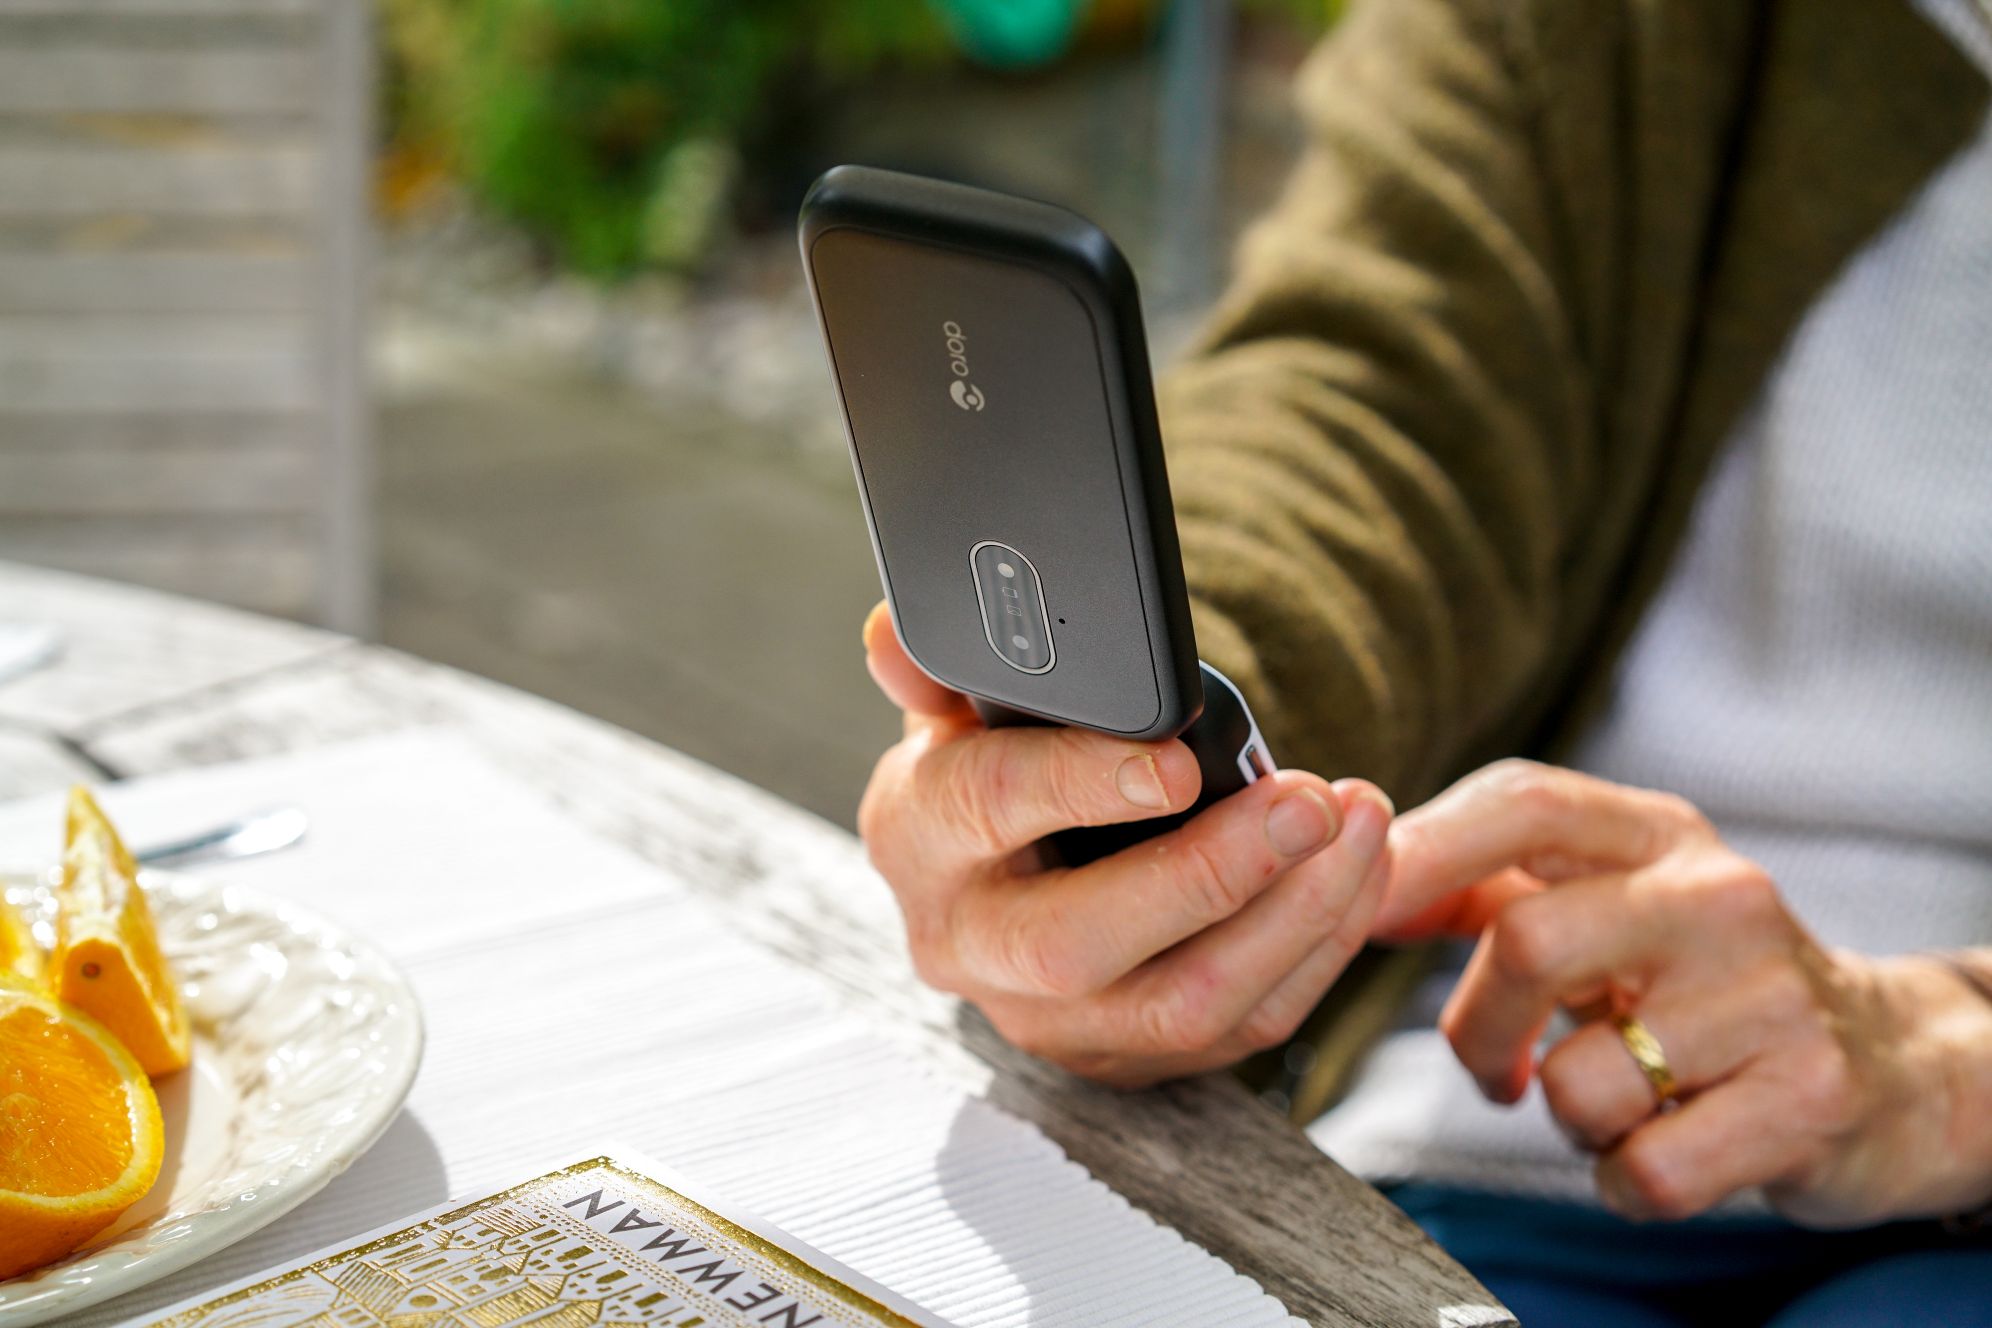 Doro menghadirkan empat ponsel fungsional di IFA 2019 yang dirancang untuk meningkatkan kehidupan sehari-hari pengguna yang lebih tua